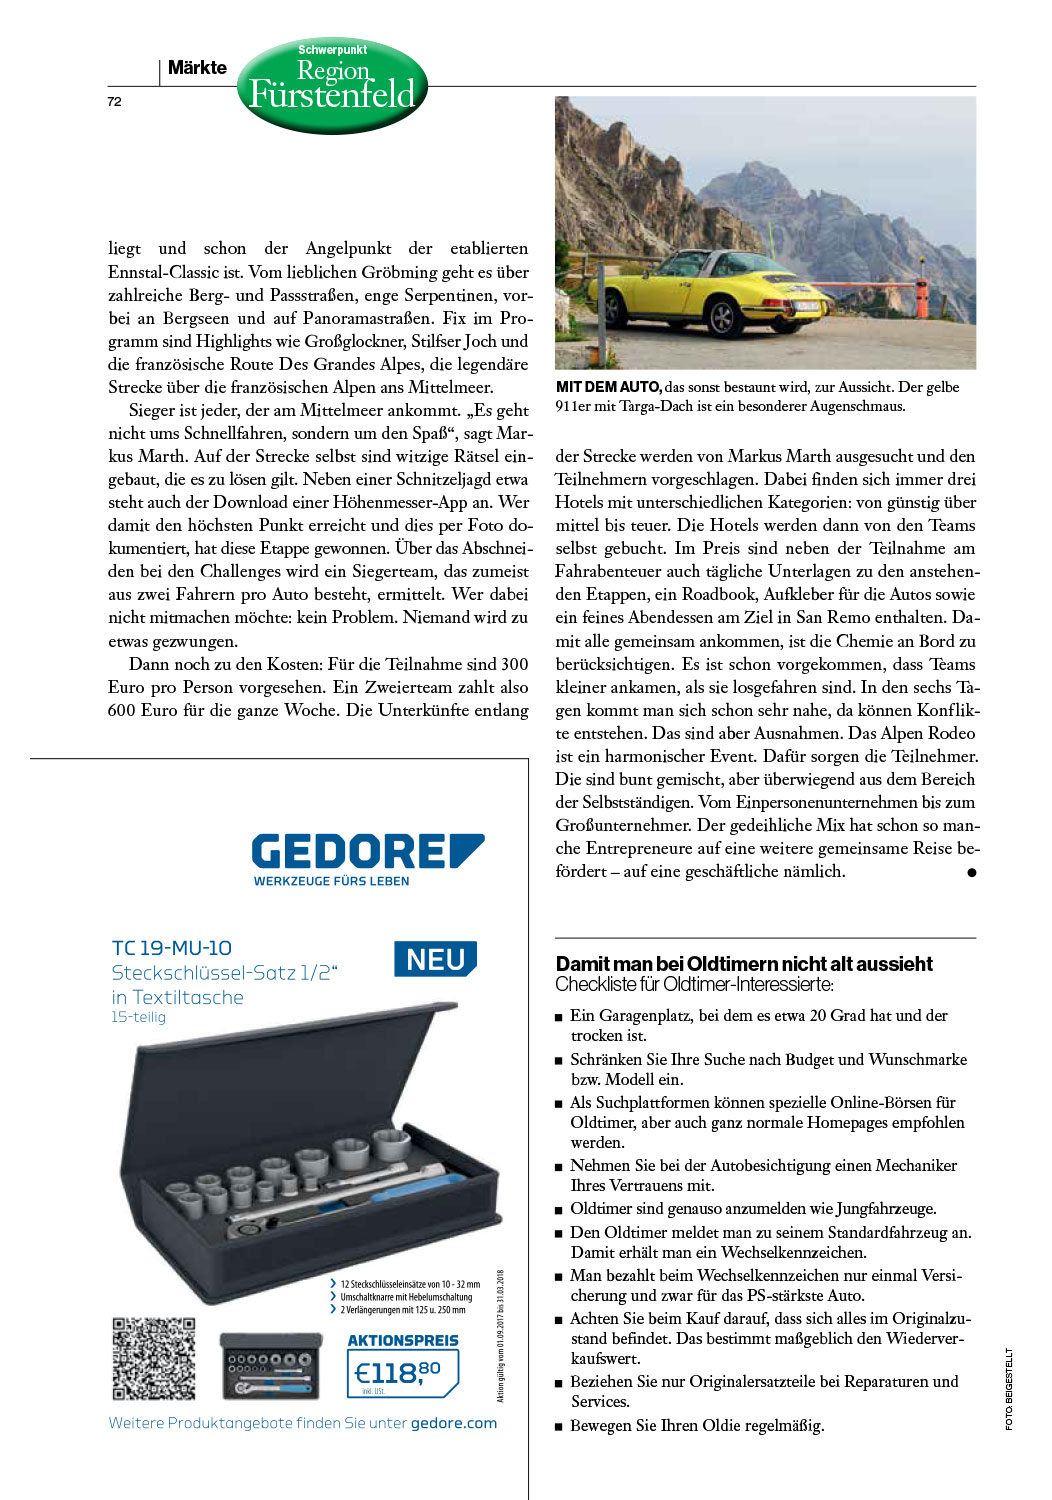 Alpen-Rodeo-Bericht-Steiermark-Magazin-Oktober-2017-5.jpg